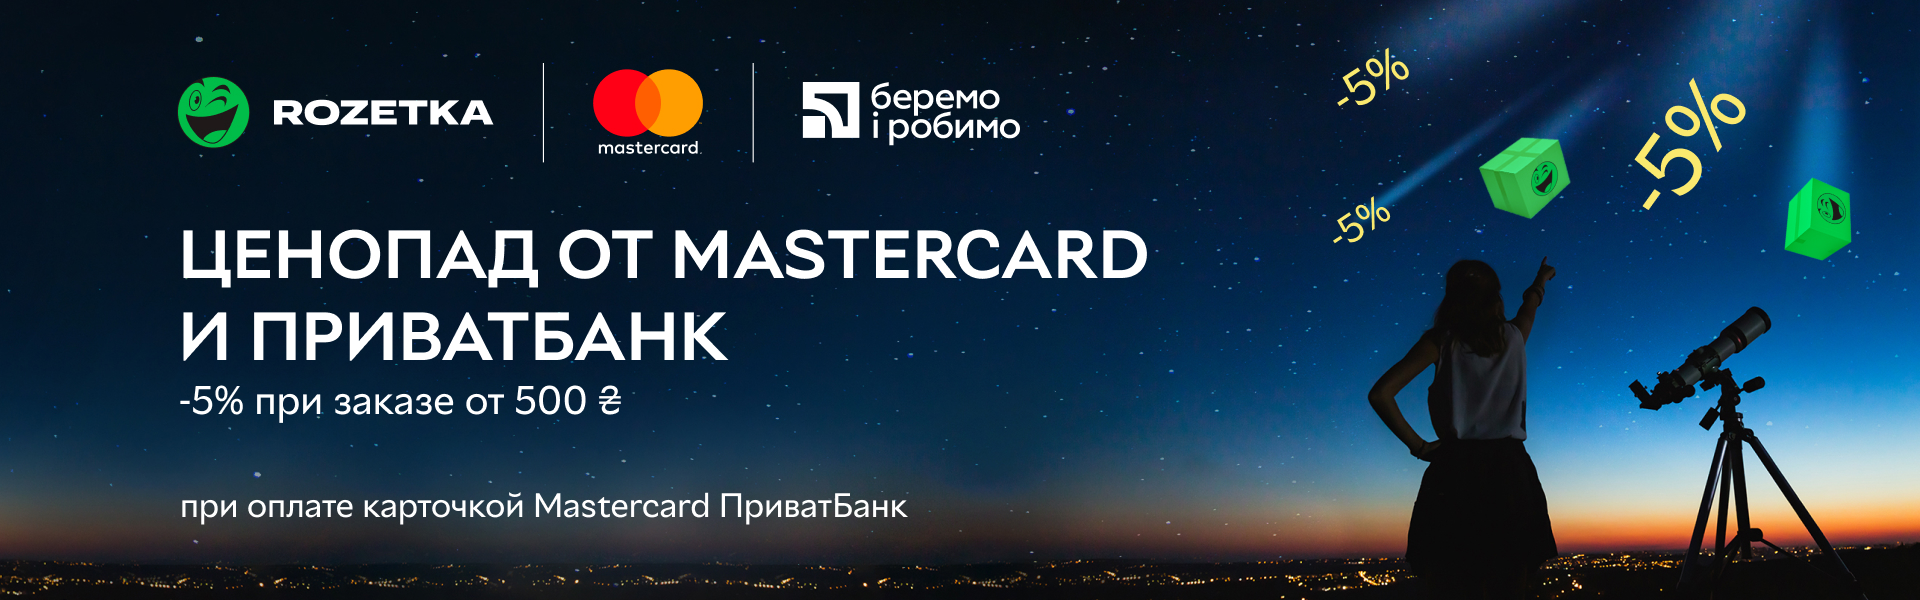 Ценопад от Mastercard и ПриватБанк. Получите скидку 5% при заказе от 500 ₴ при оплате карточкой Mastercard ПриватБанк